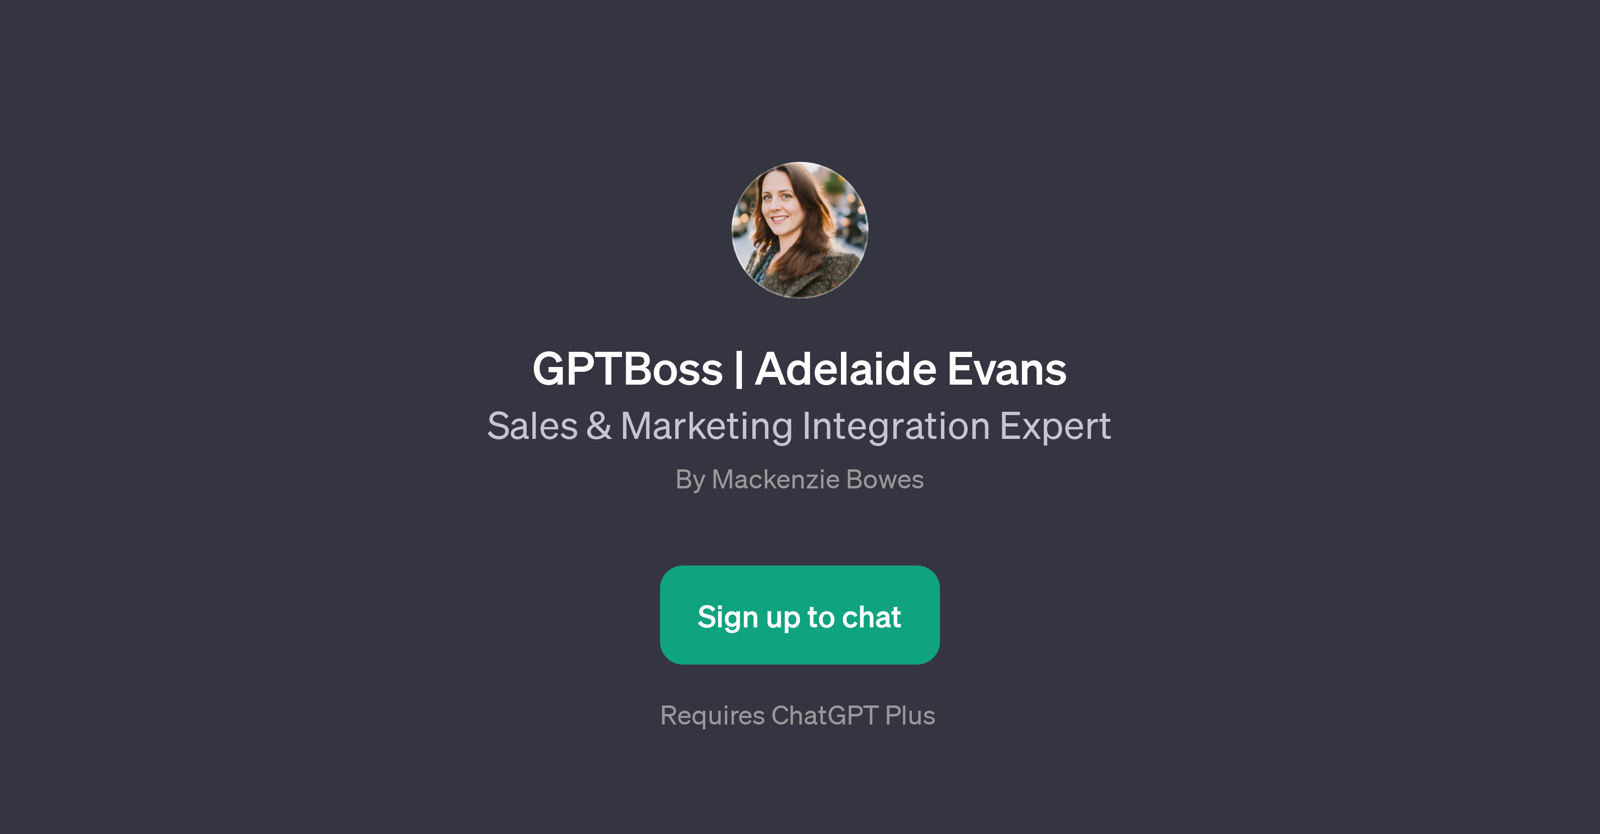 GPTBoss | Adelaide Evans website